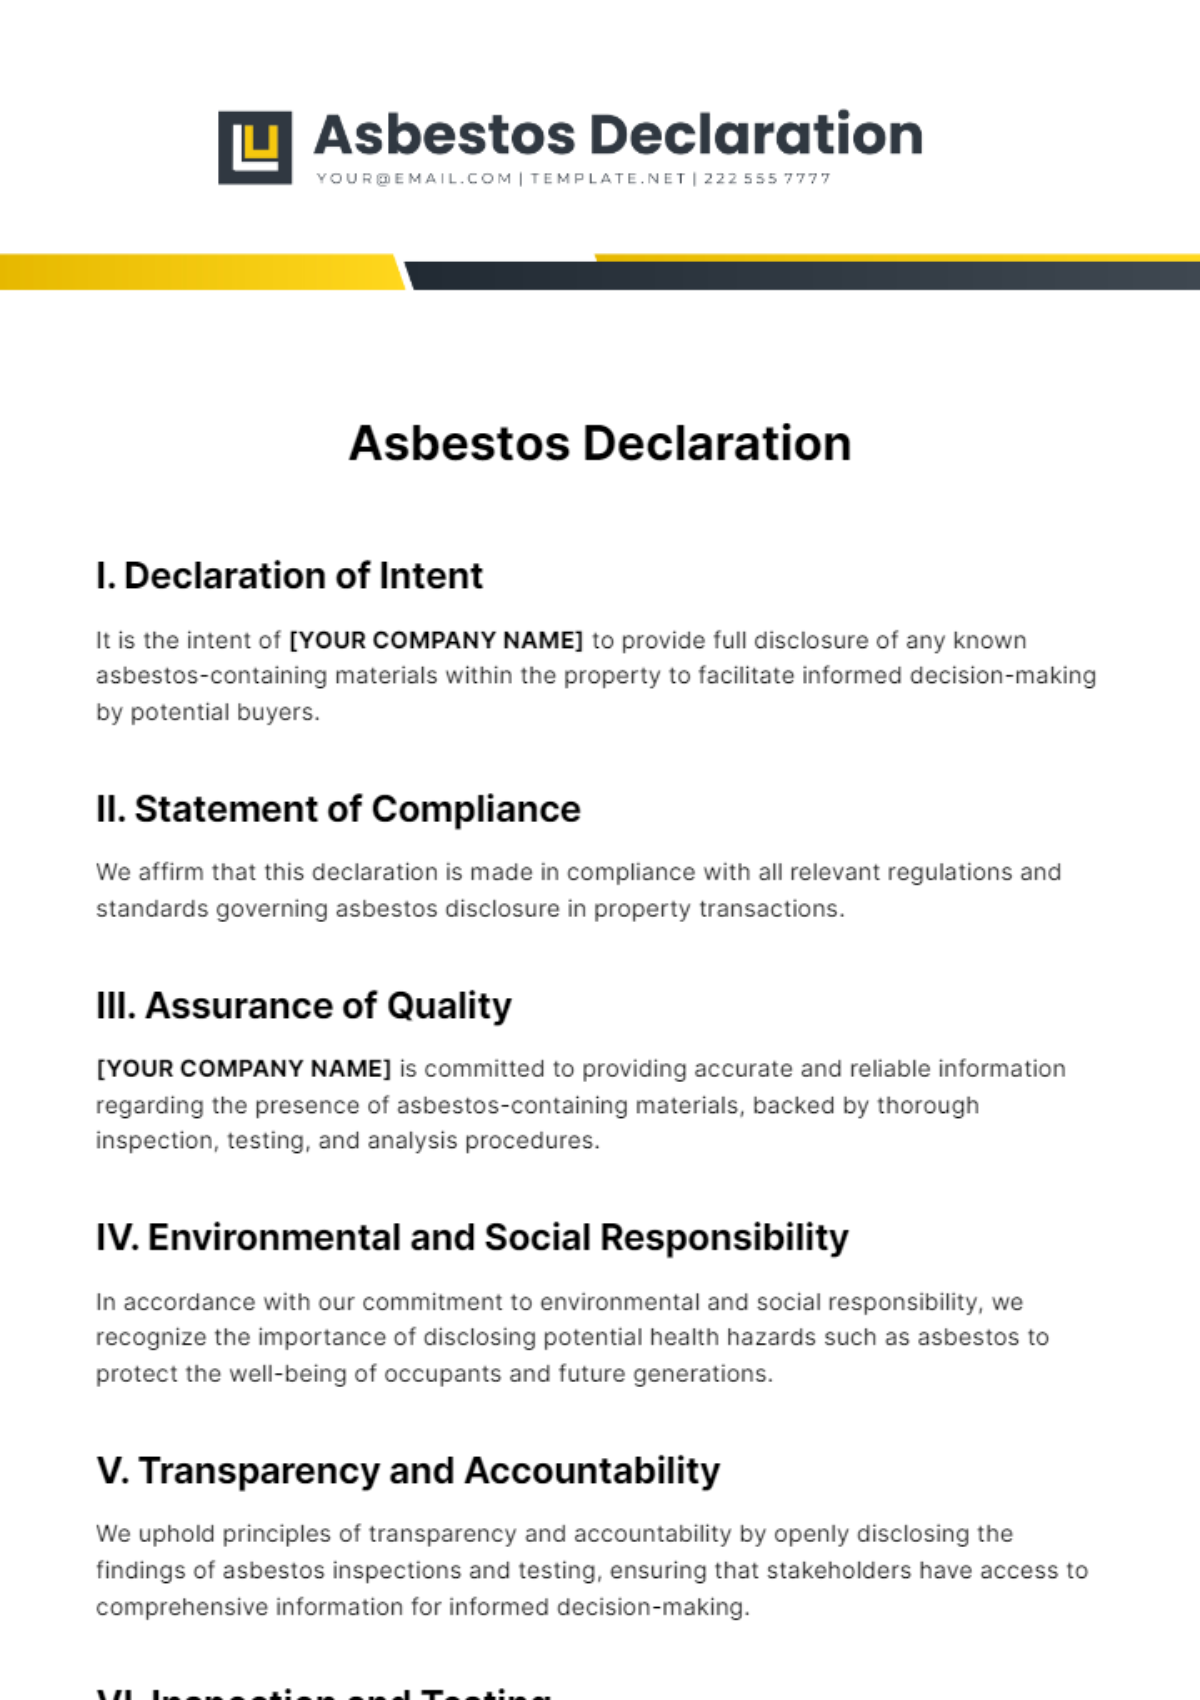 Asbestos Declaration Template